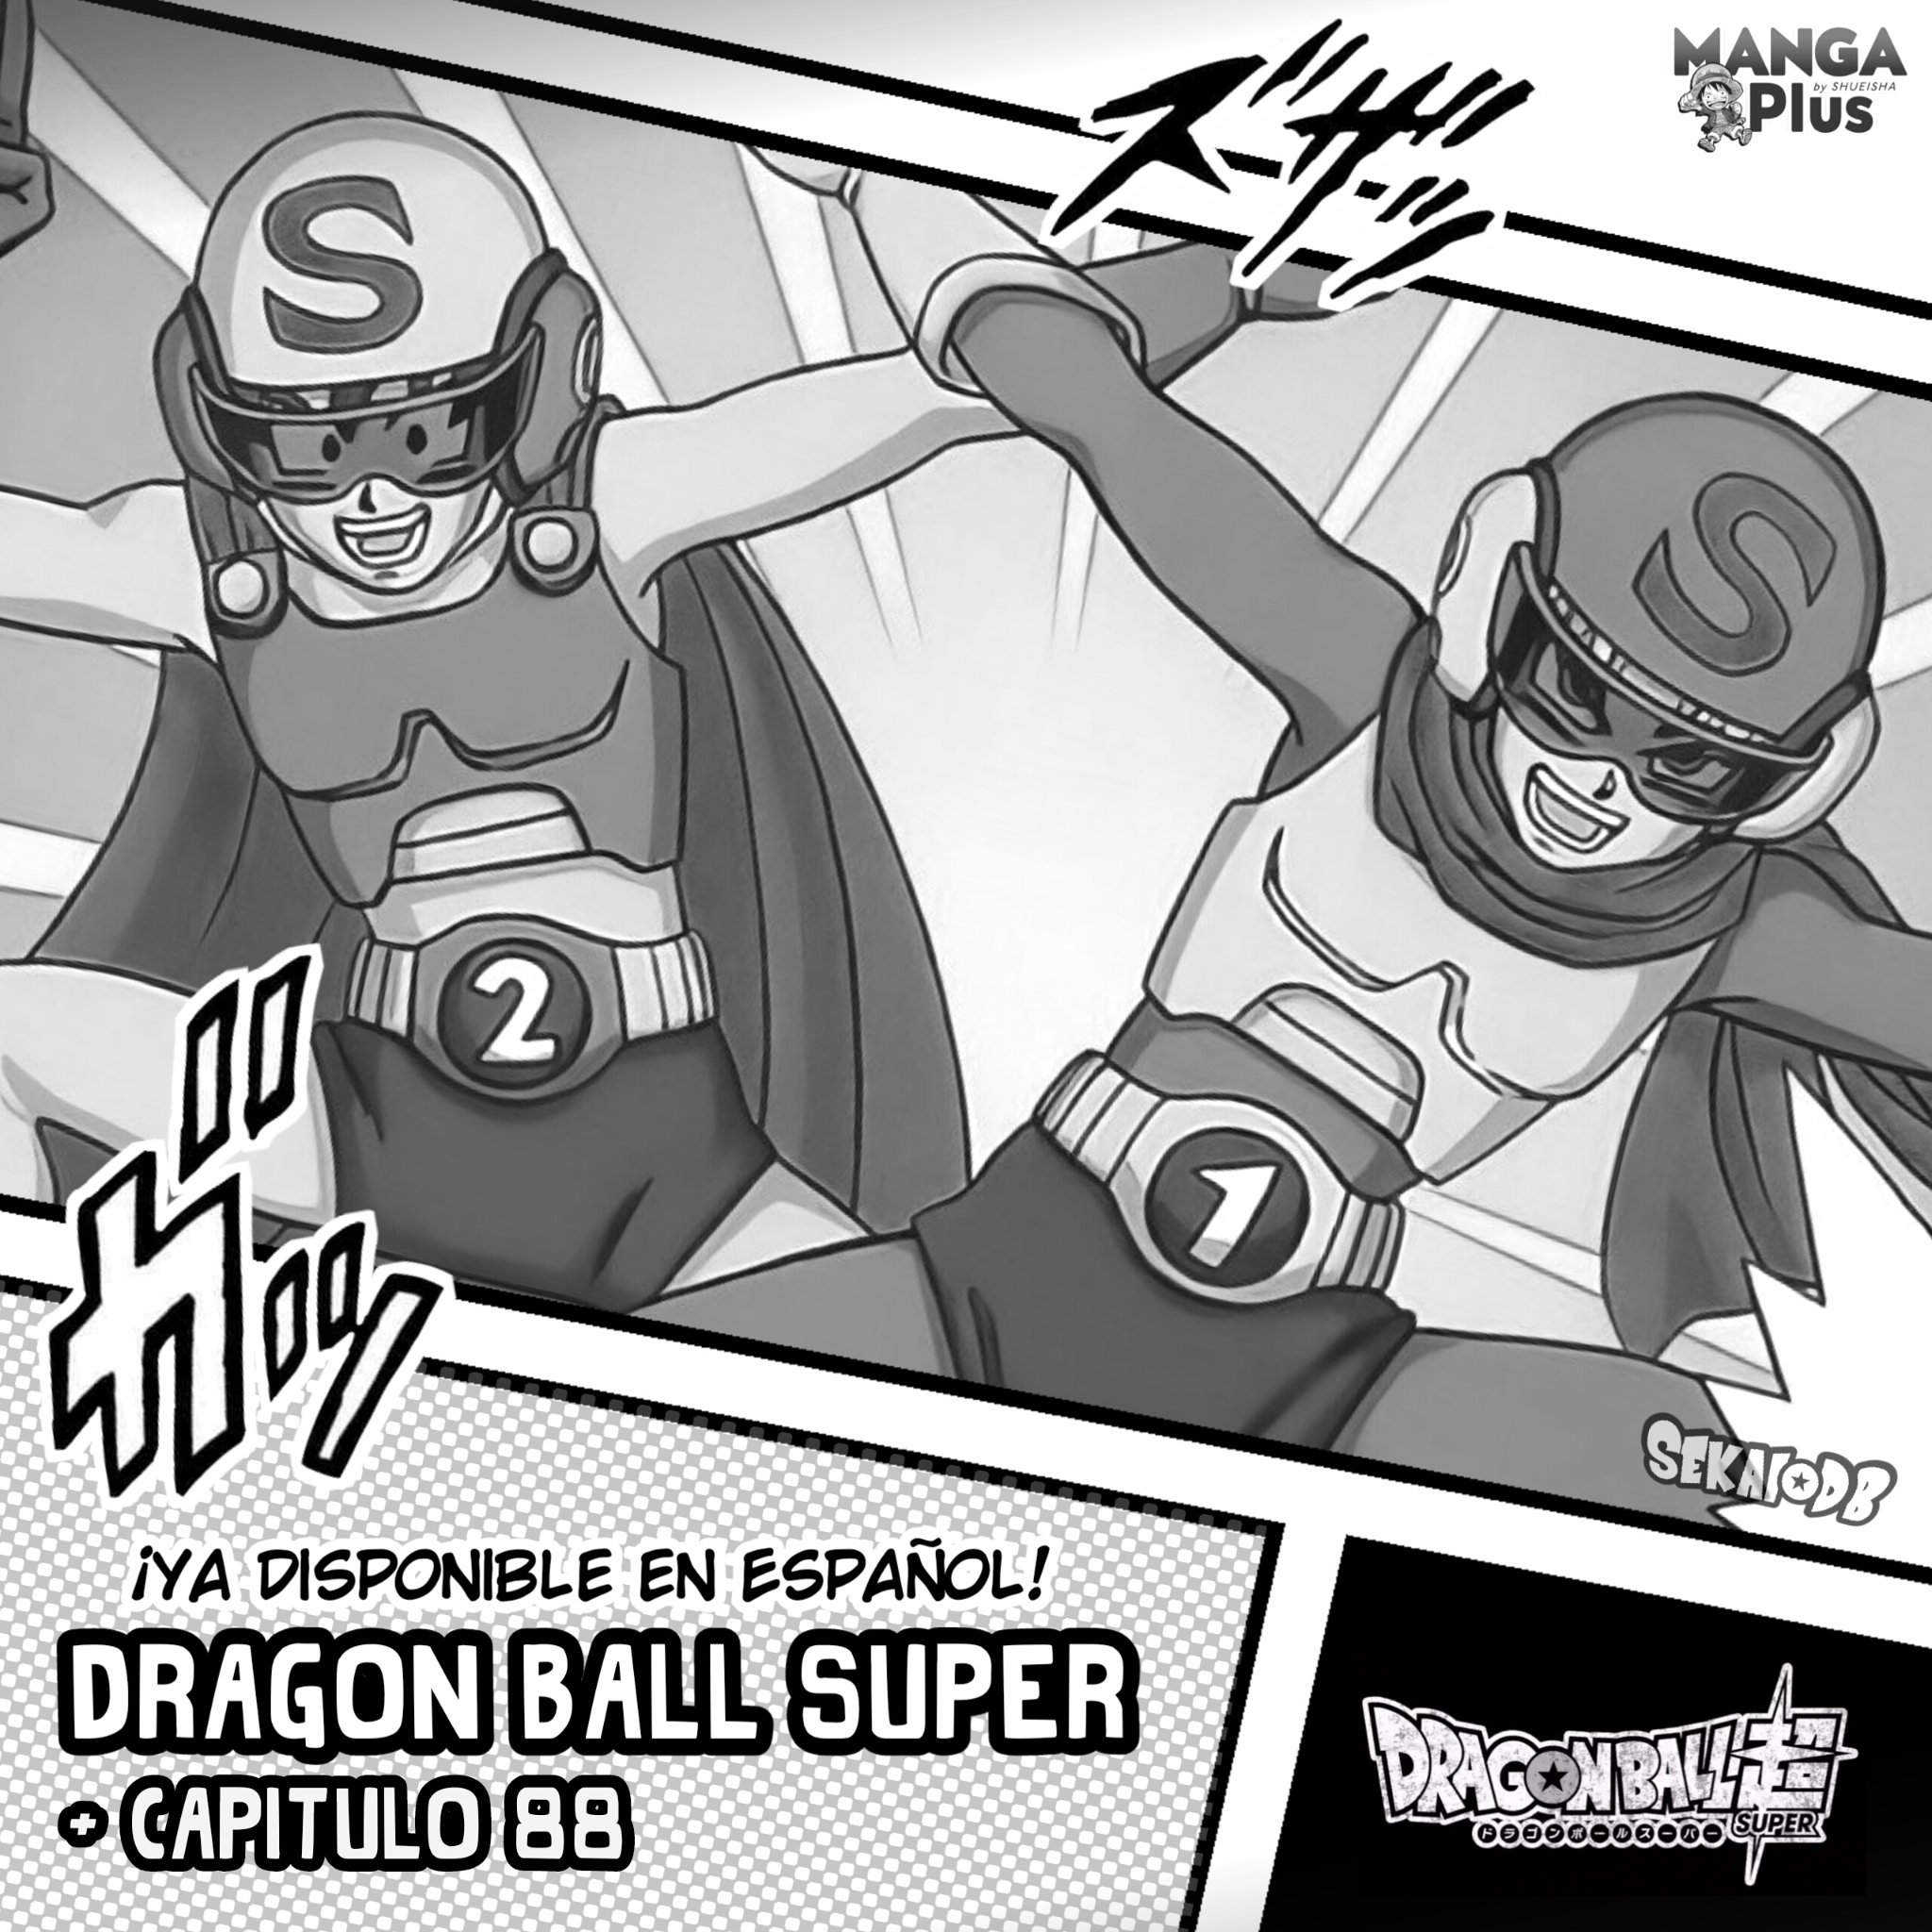 Sekai DB 世界 on X: [MANGA DRAGON BALL SUPER CAPITULO 88] ¡Disponible en  Español! El nacimiento de los superhéroes Puedes leerlo de manera legal  en MangaPlus: ⬇⬇⬇⬇⬇  #MangaDBS #DragonBallSuper   /